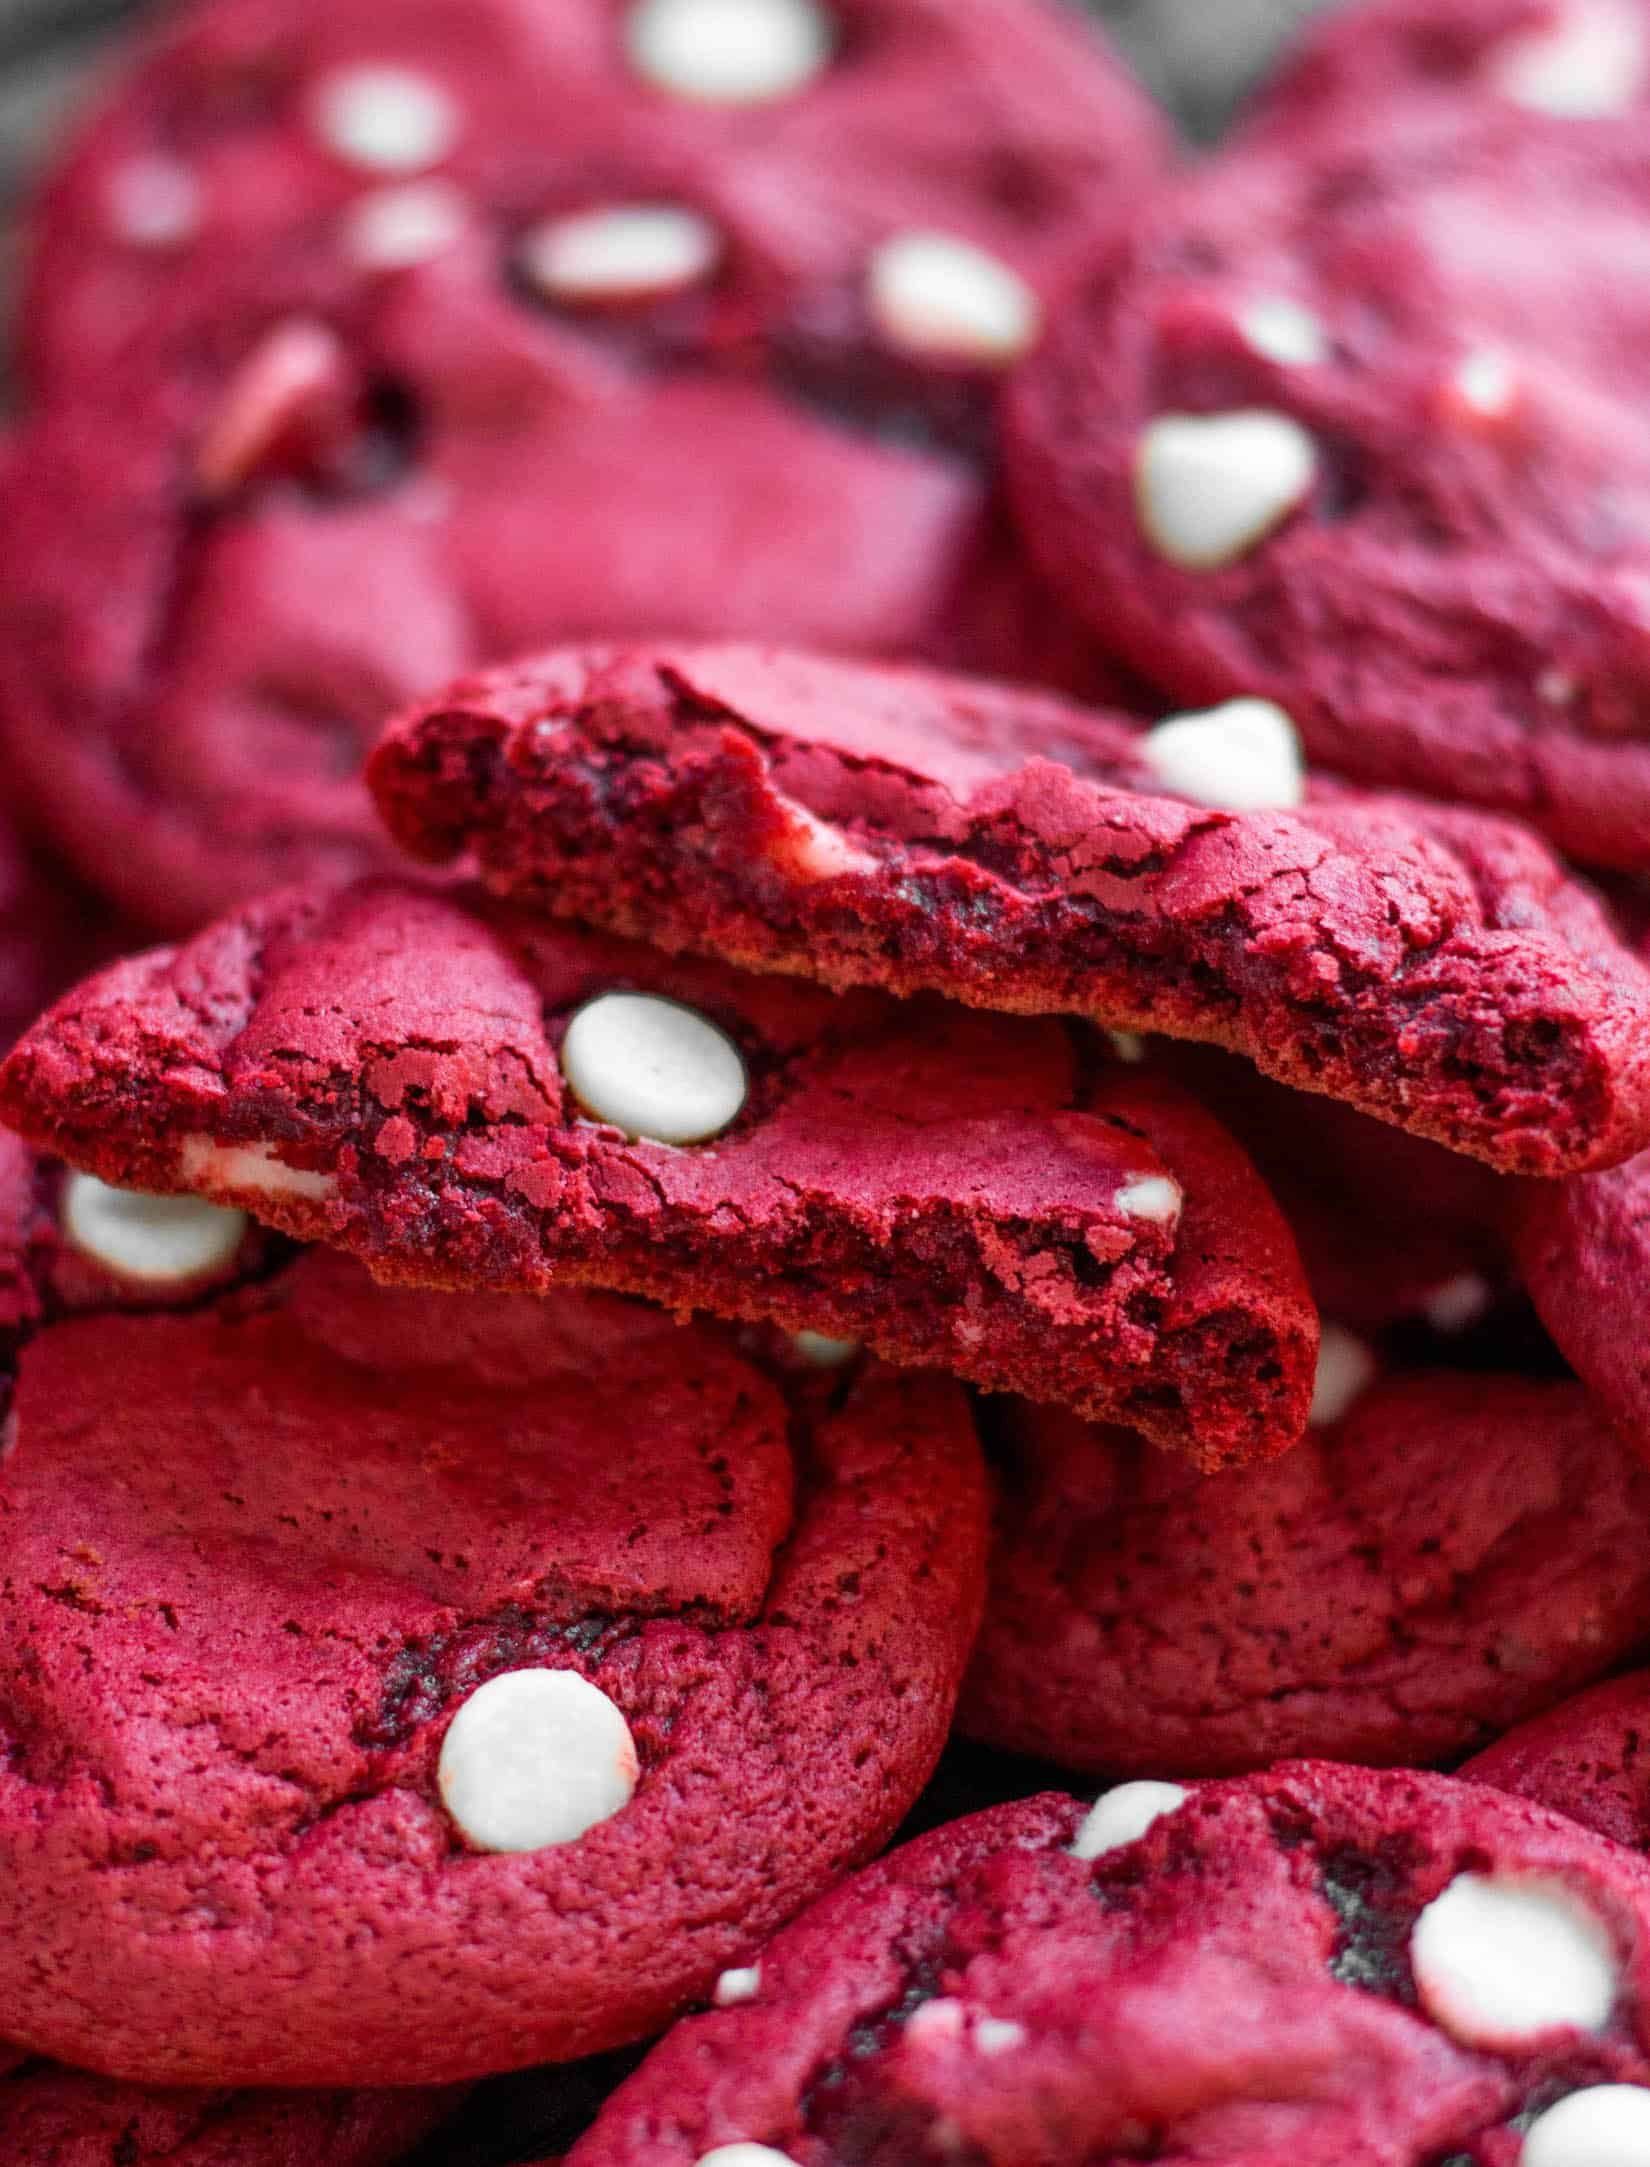 Red cookies. Red Velvet cookie. Красное печенье. Красные печеньки. Печенье красный бархат с трещинками.